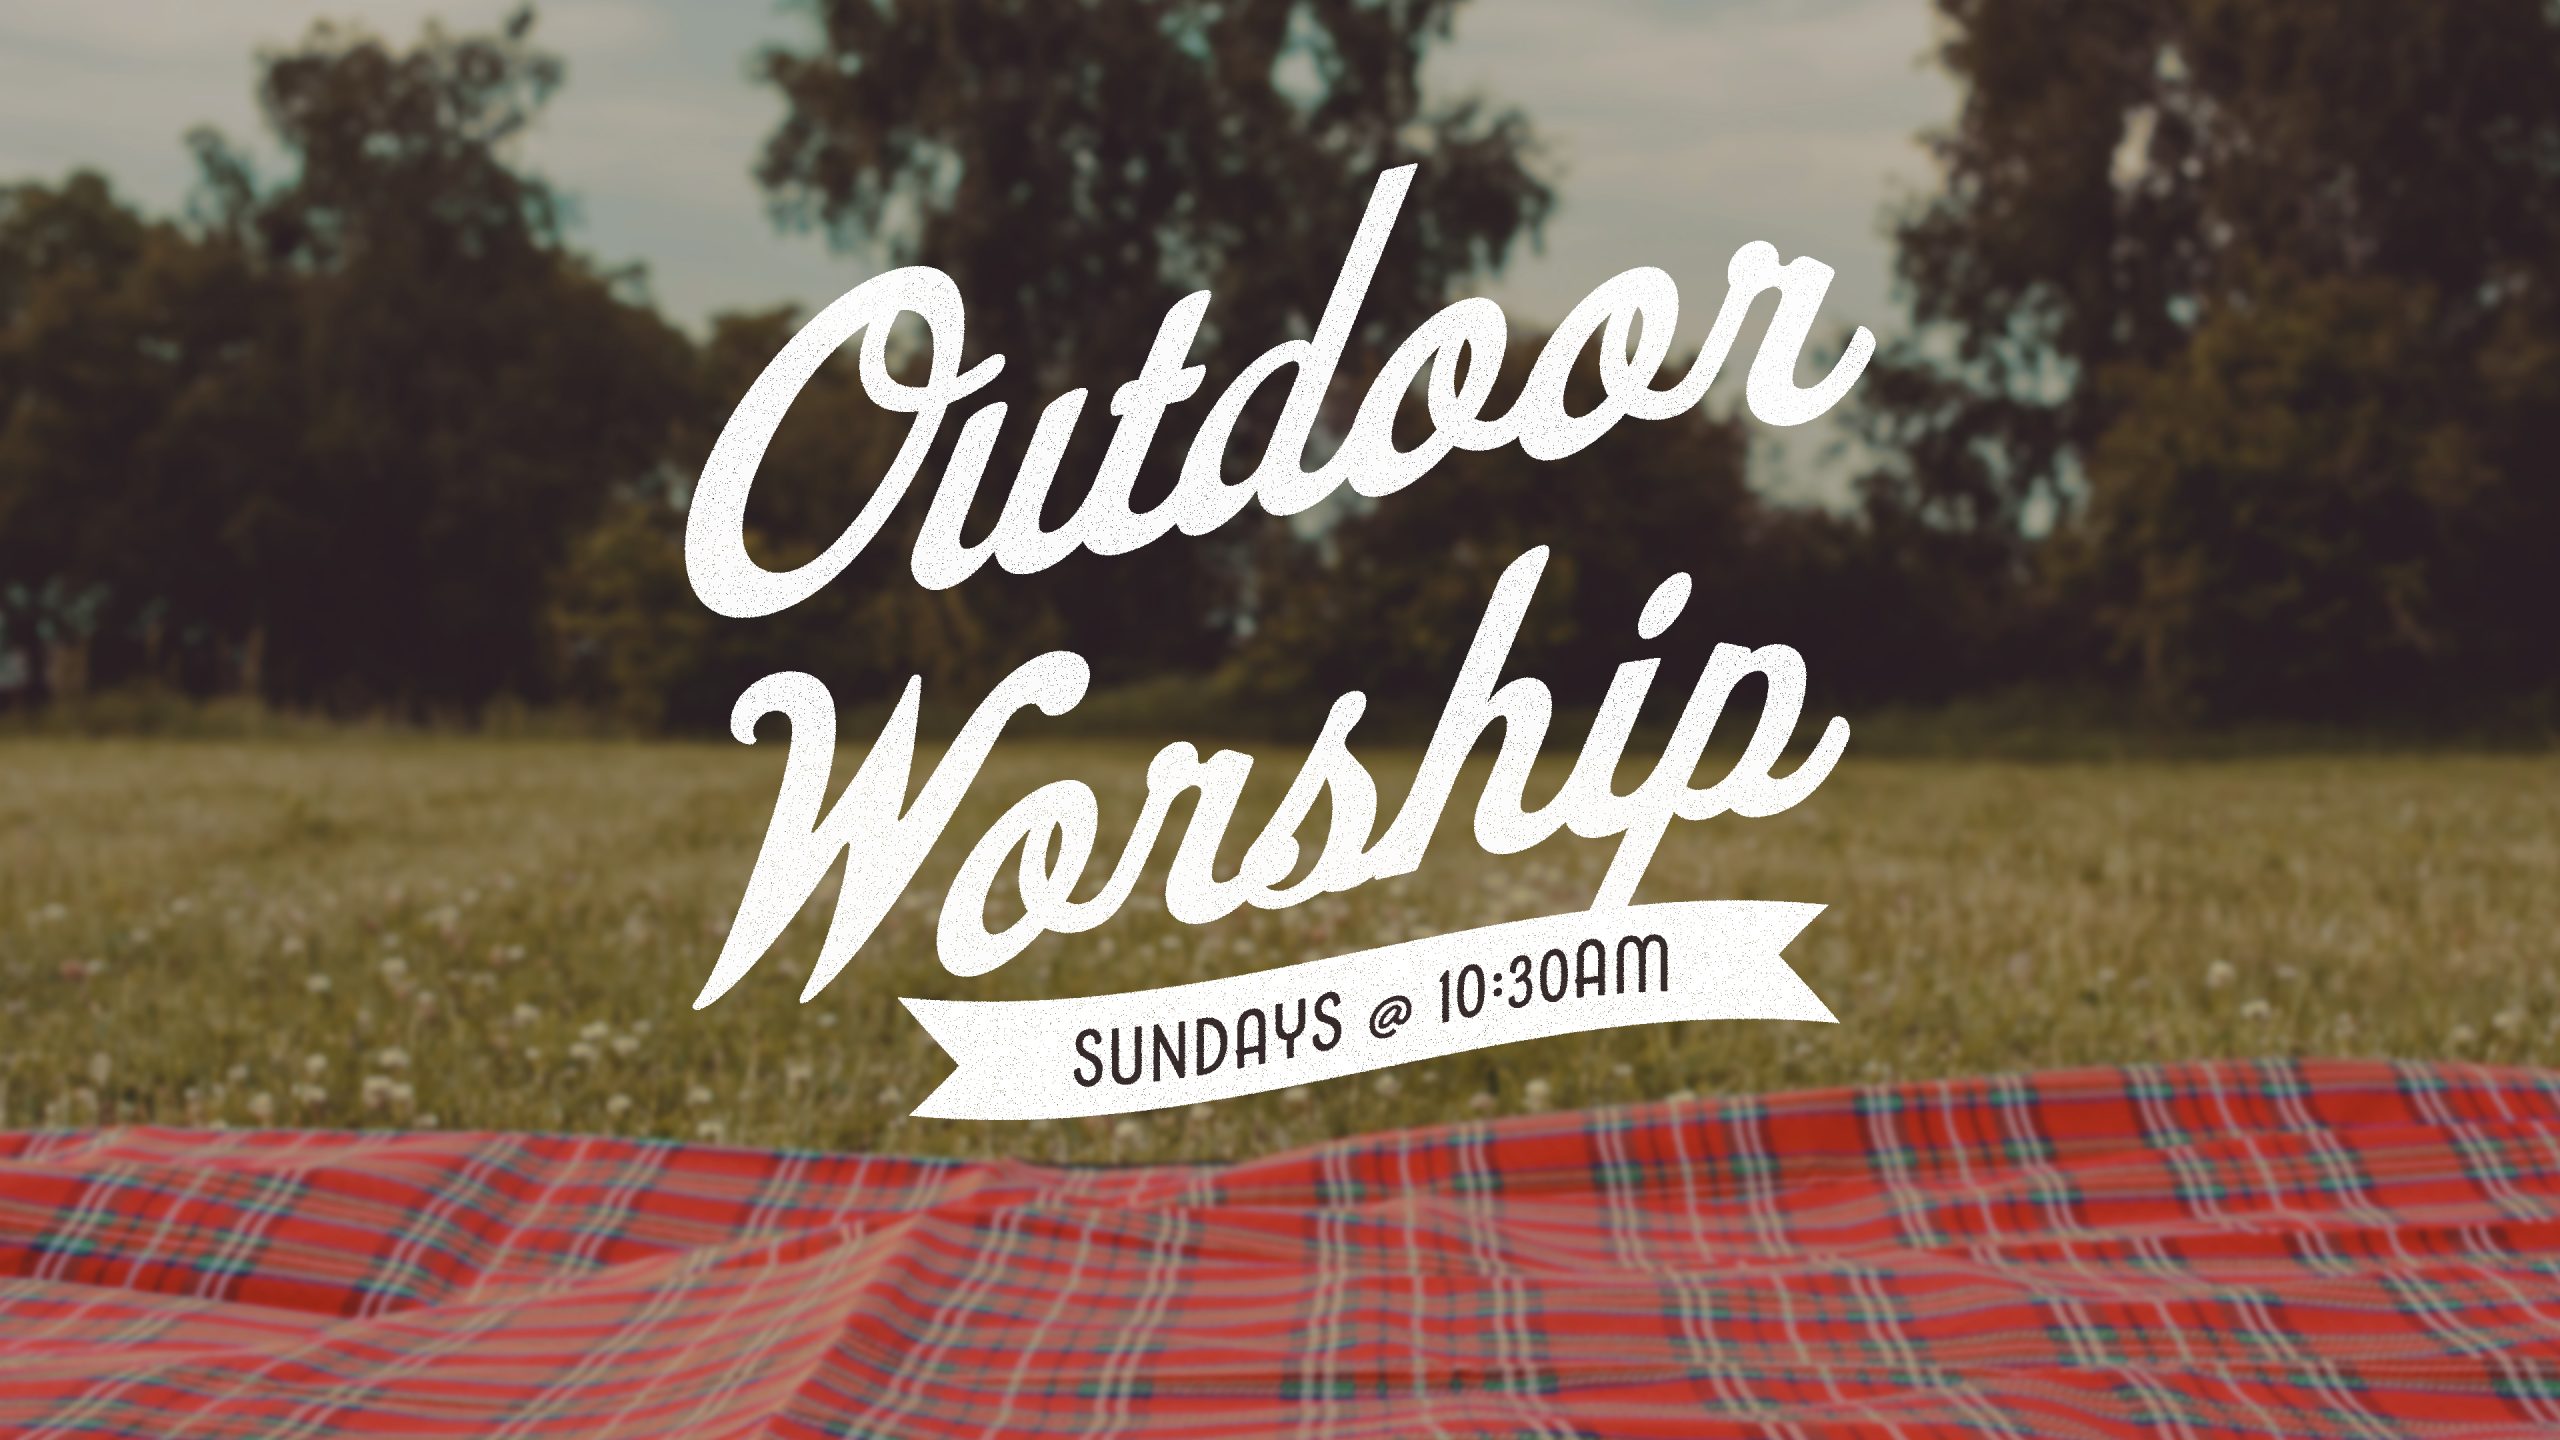 Outdoor Worship